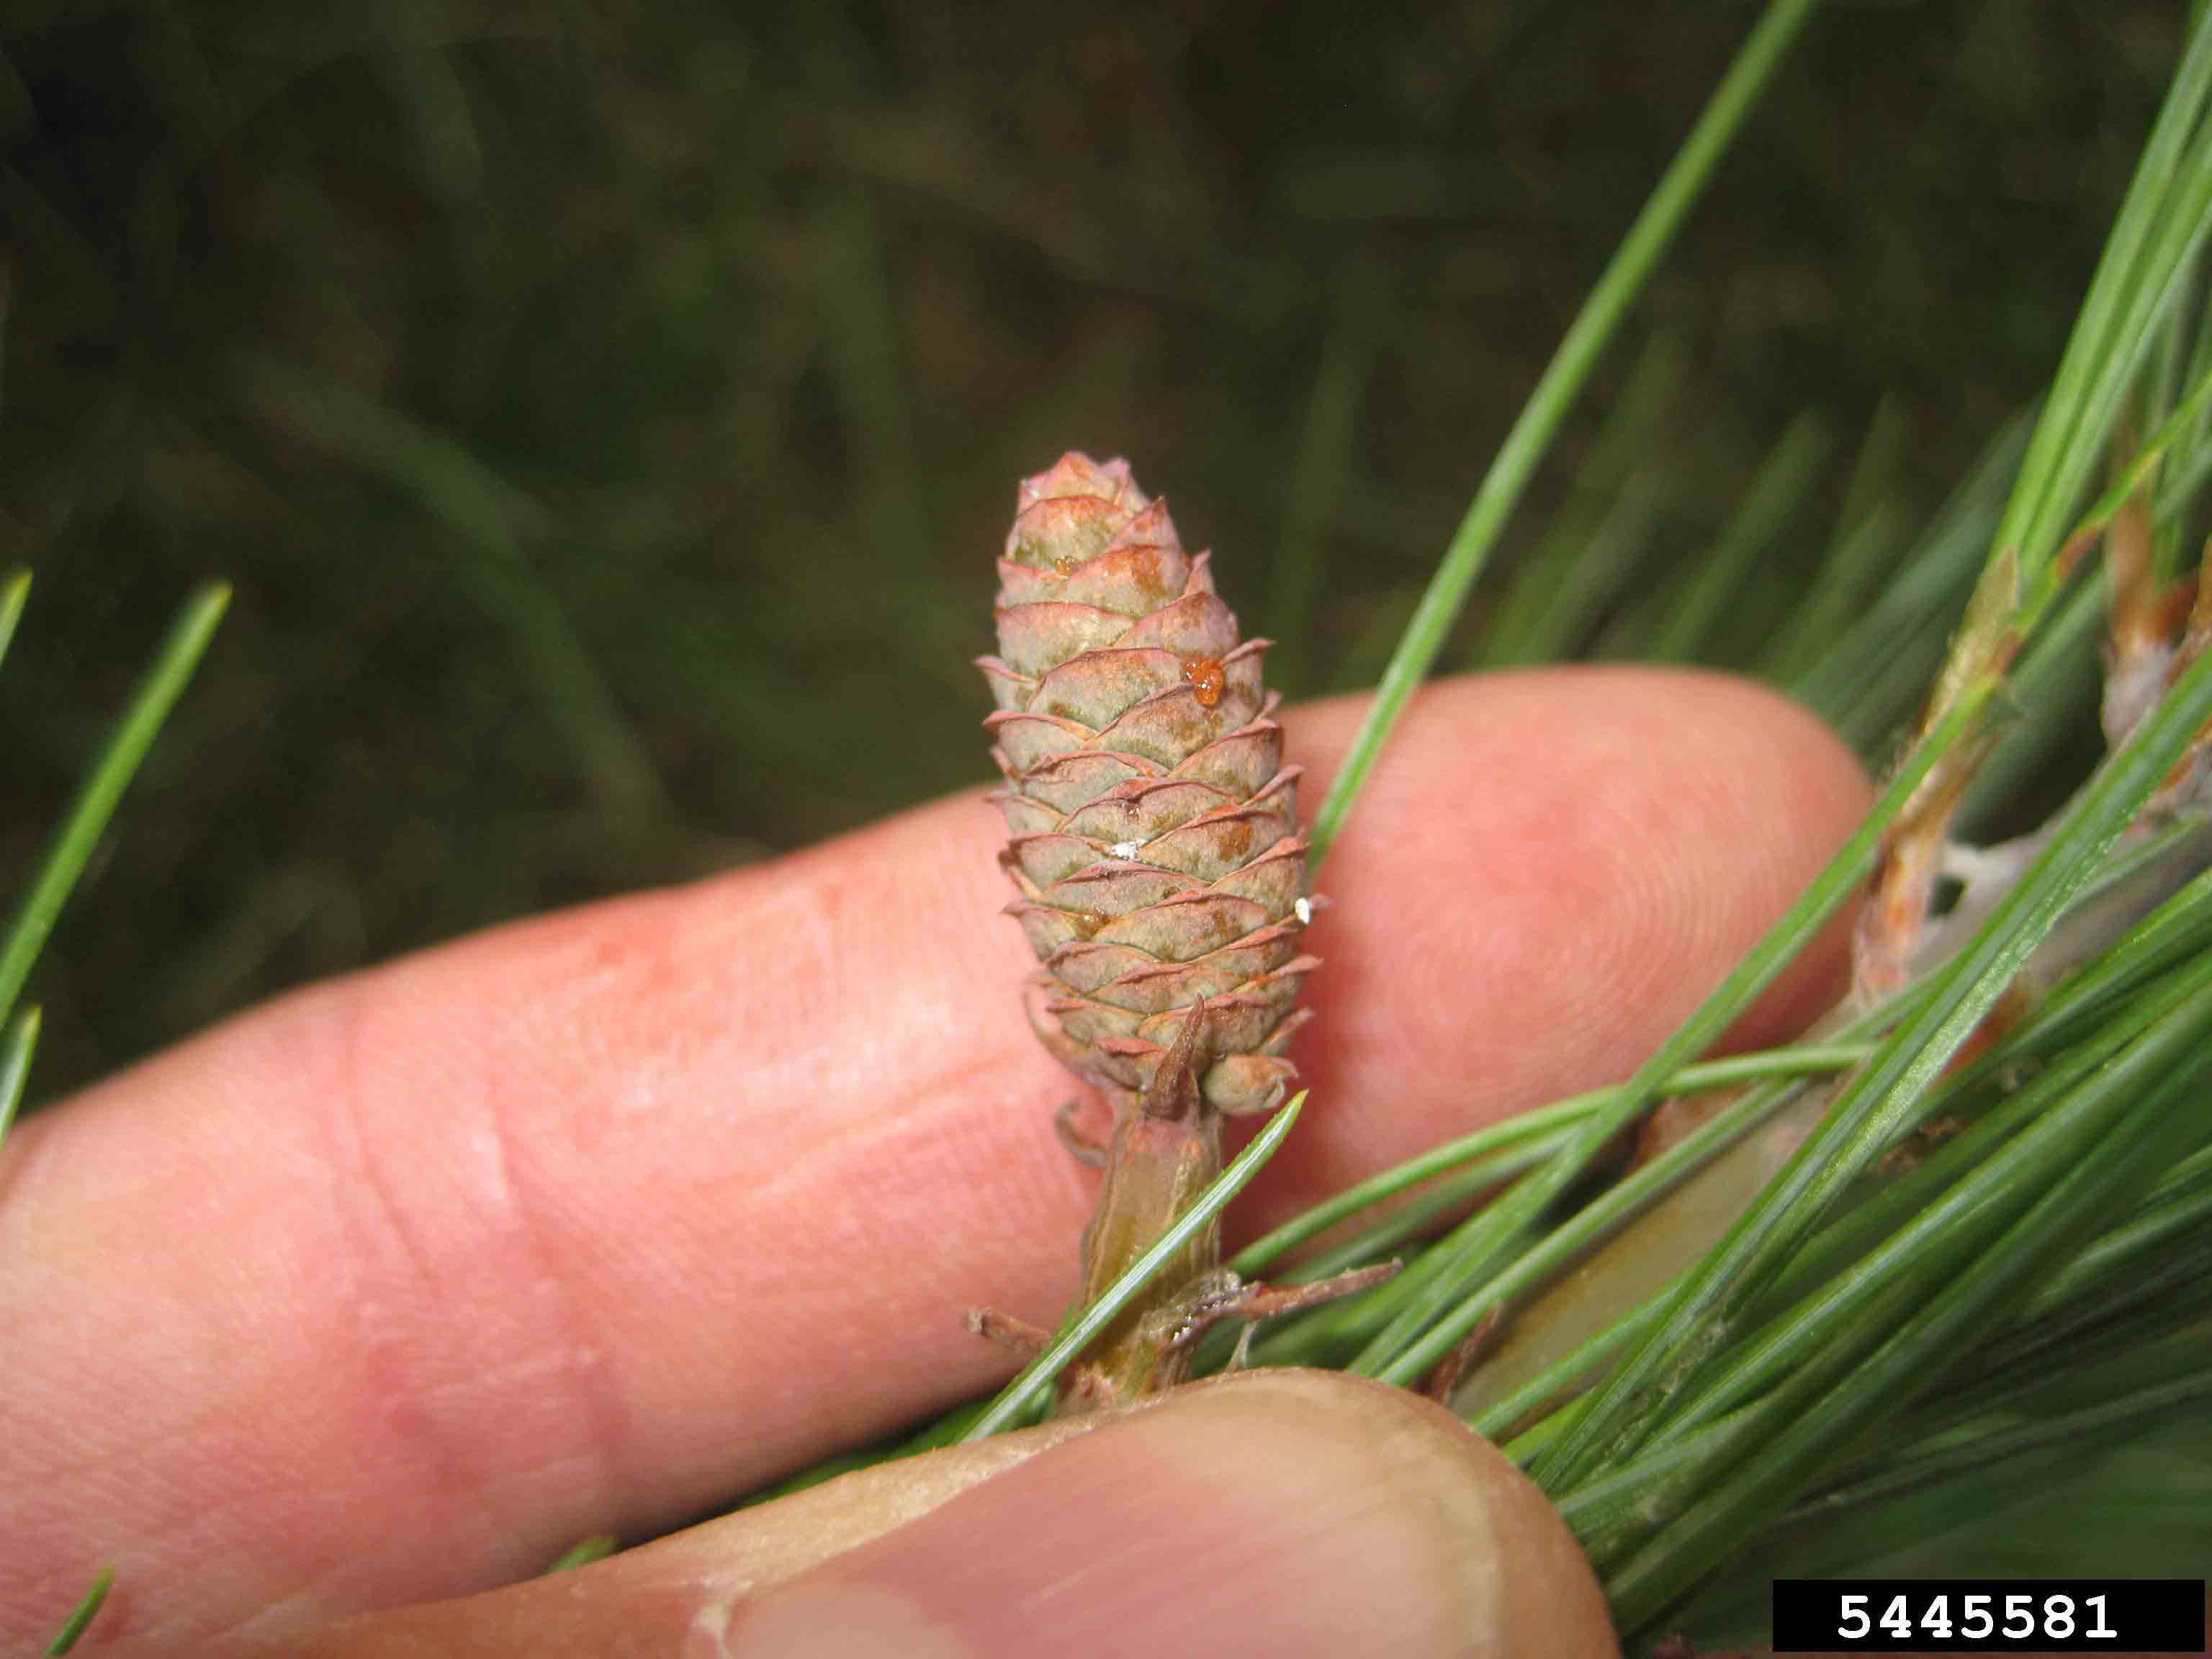 Eastern white pine cone, immature